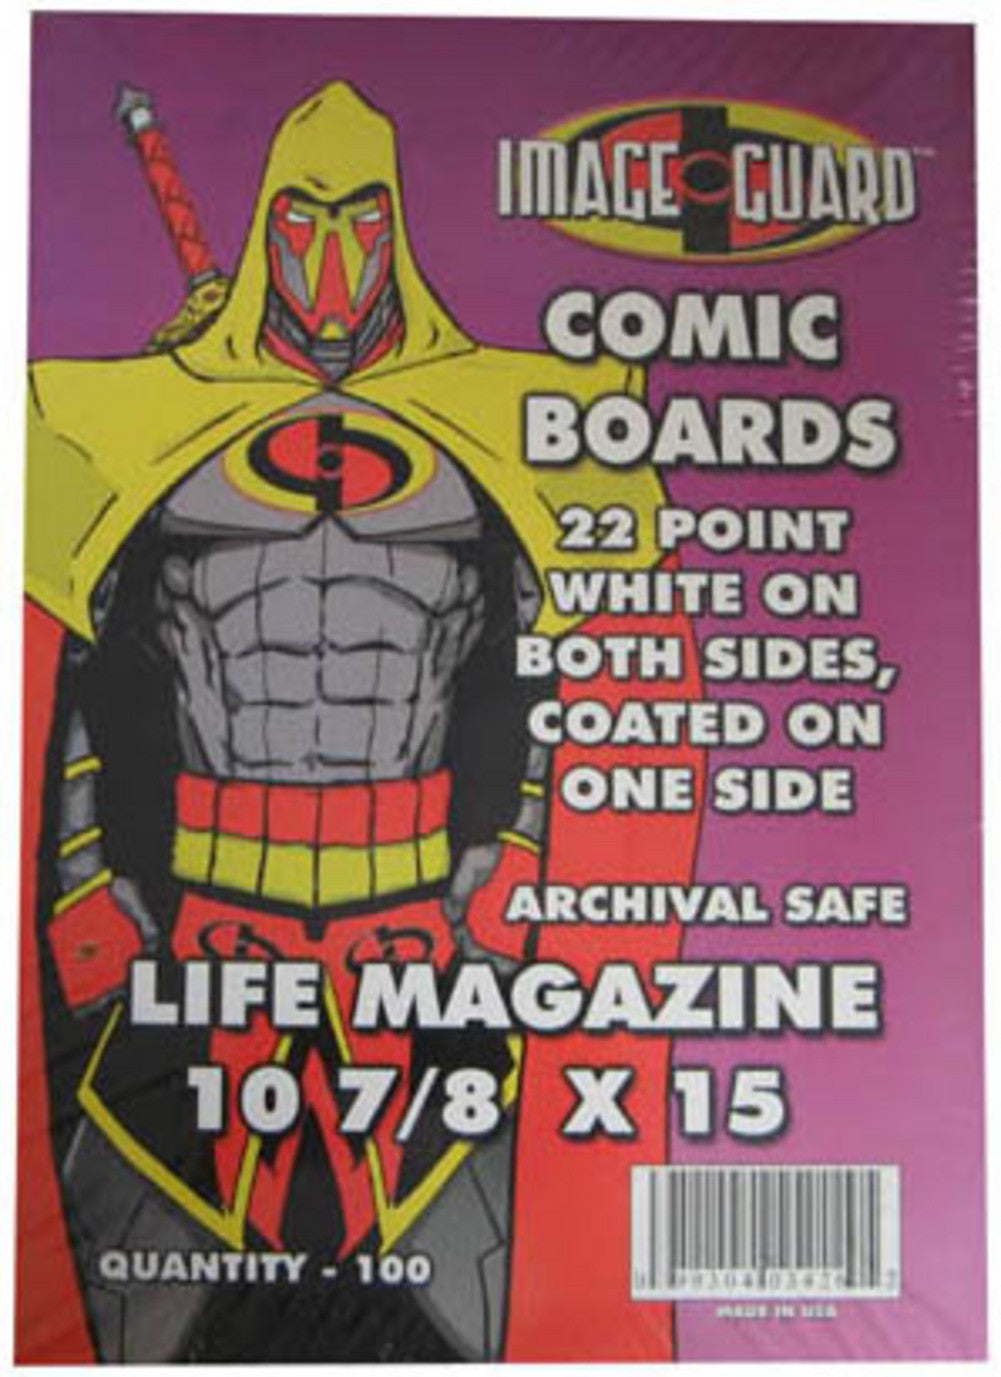 Image Guard Comic Backing Boards Life Magazine Size